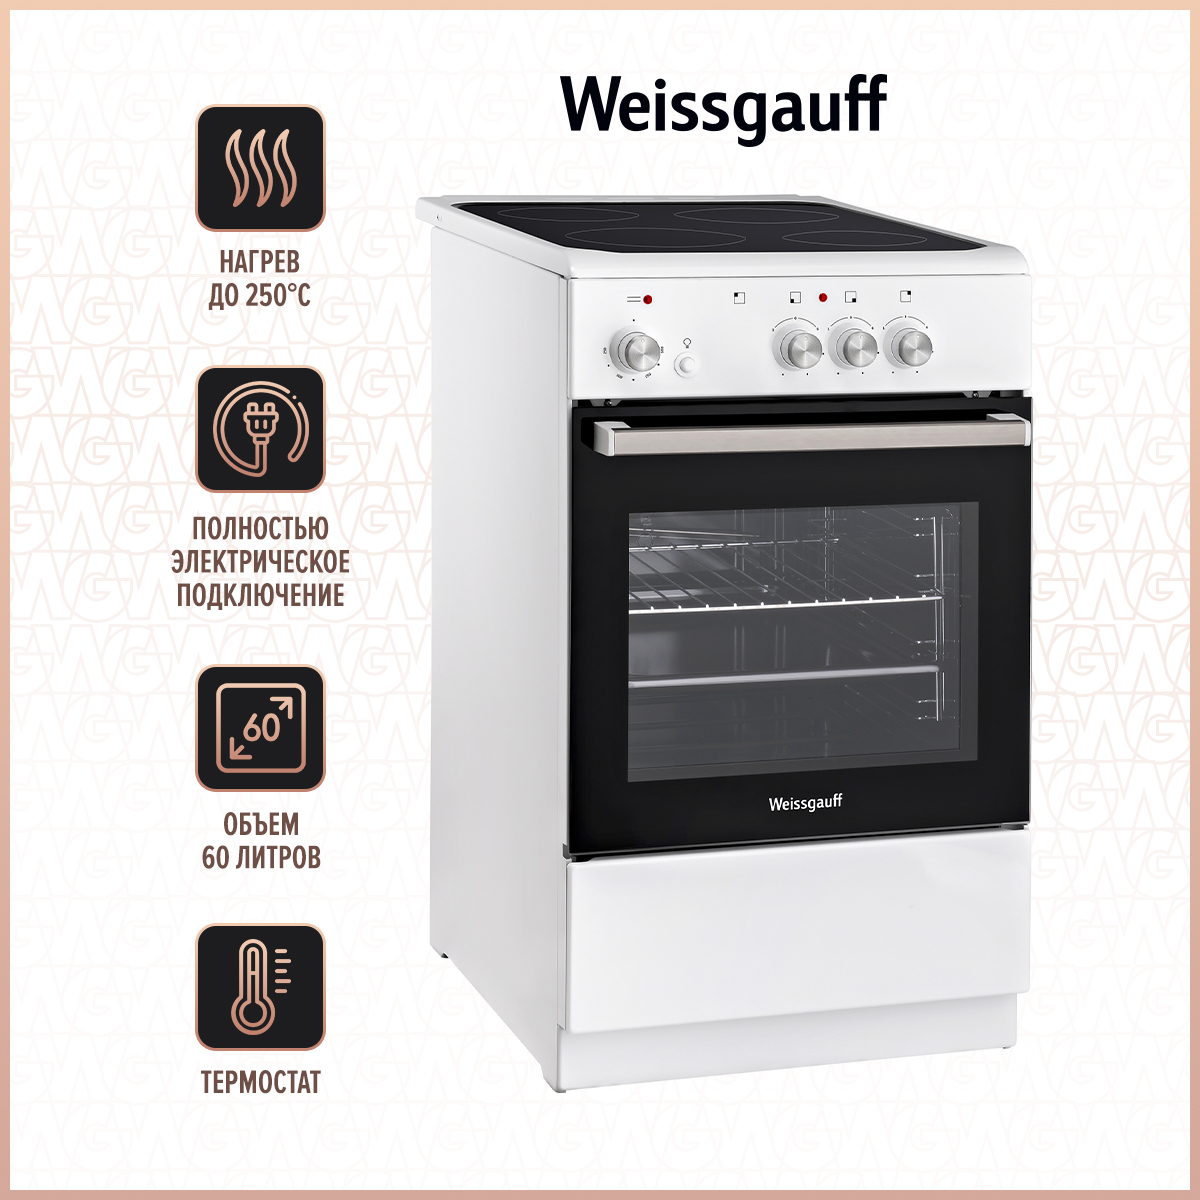 Электрическая плита Weissgauff WES E2V02 WS белый электрическая плита weissgauff wes 2v16 be серебристый